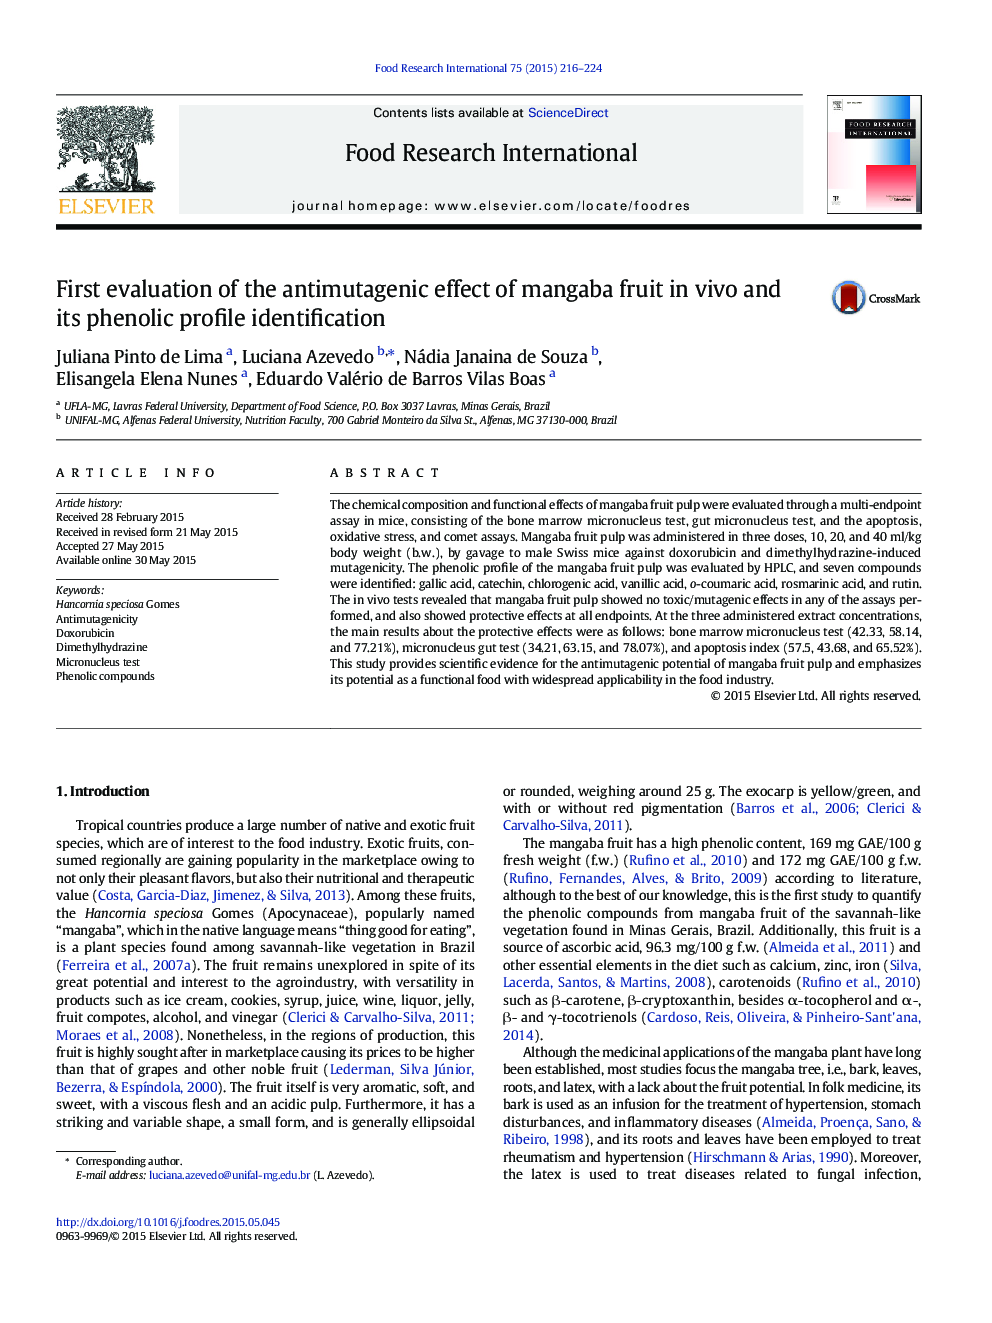 First evaluation of the antimutagenic effect of mangaba fruit in vivo and its phenolic profile identification